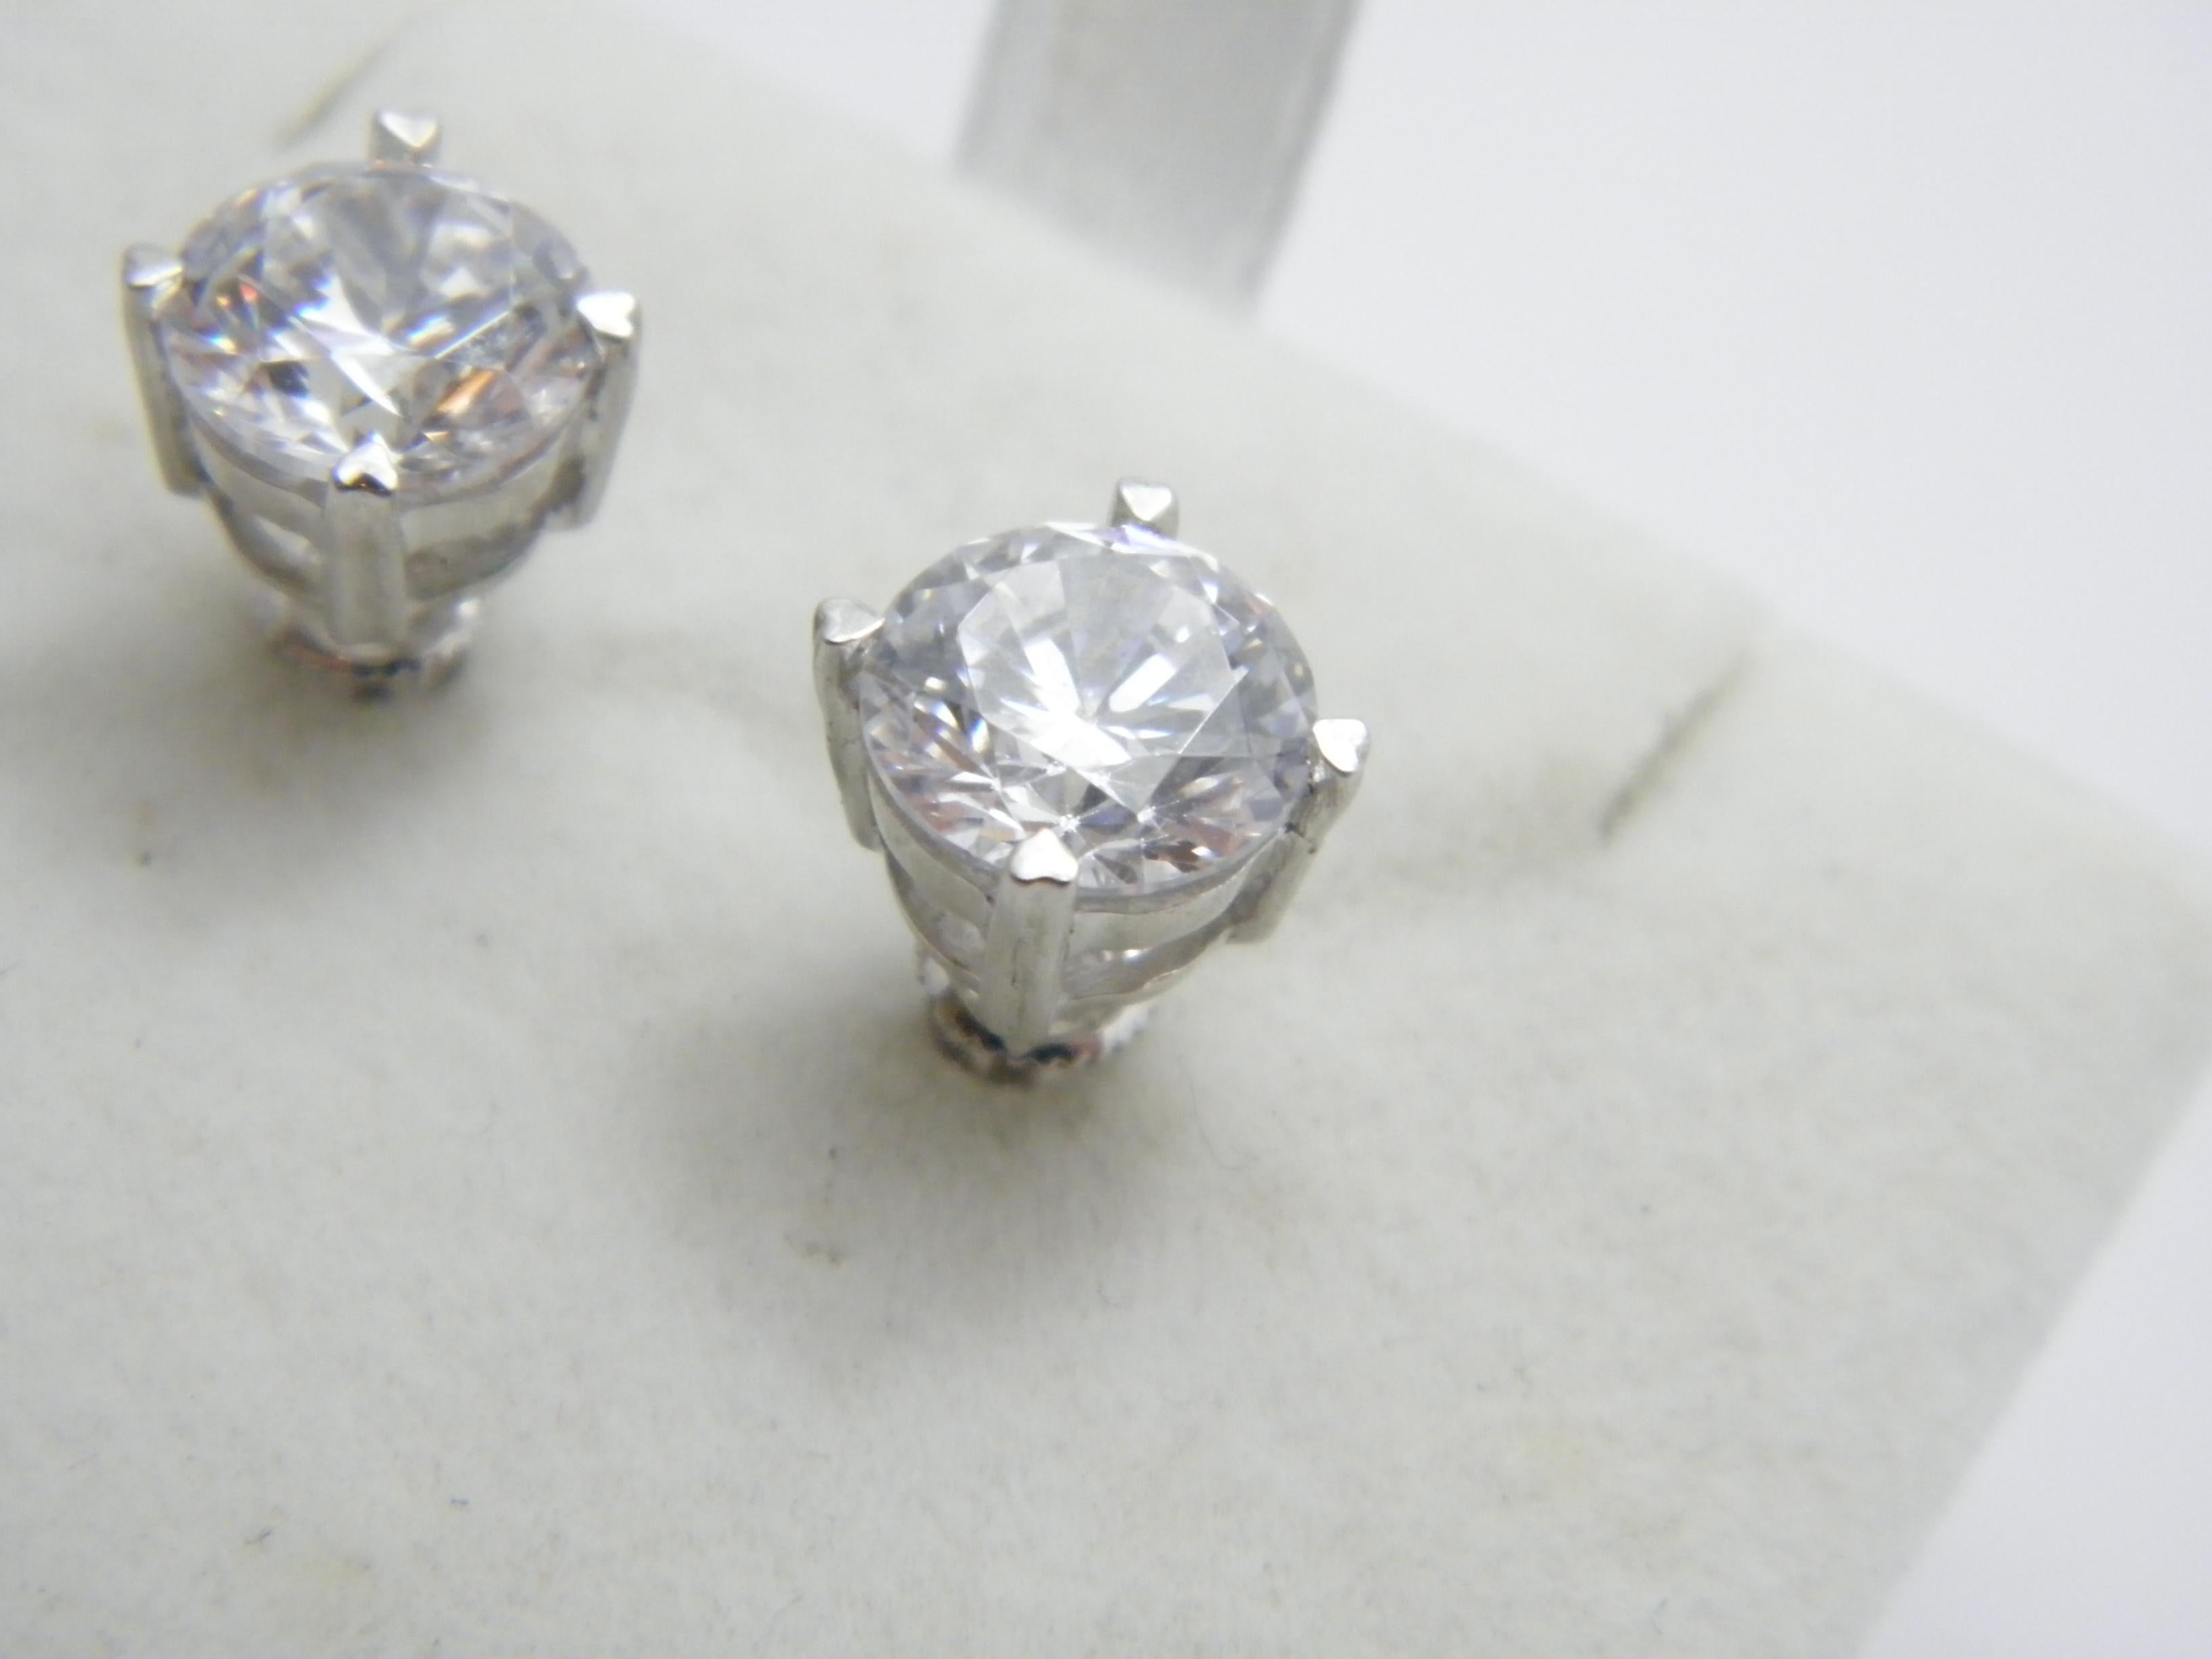 3.5 carat diamond earrings